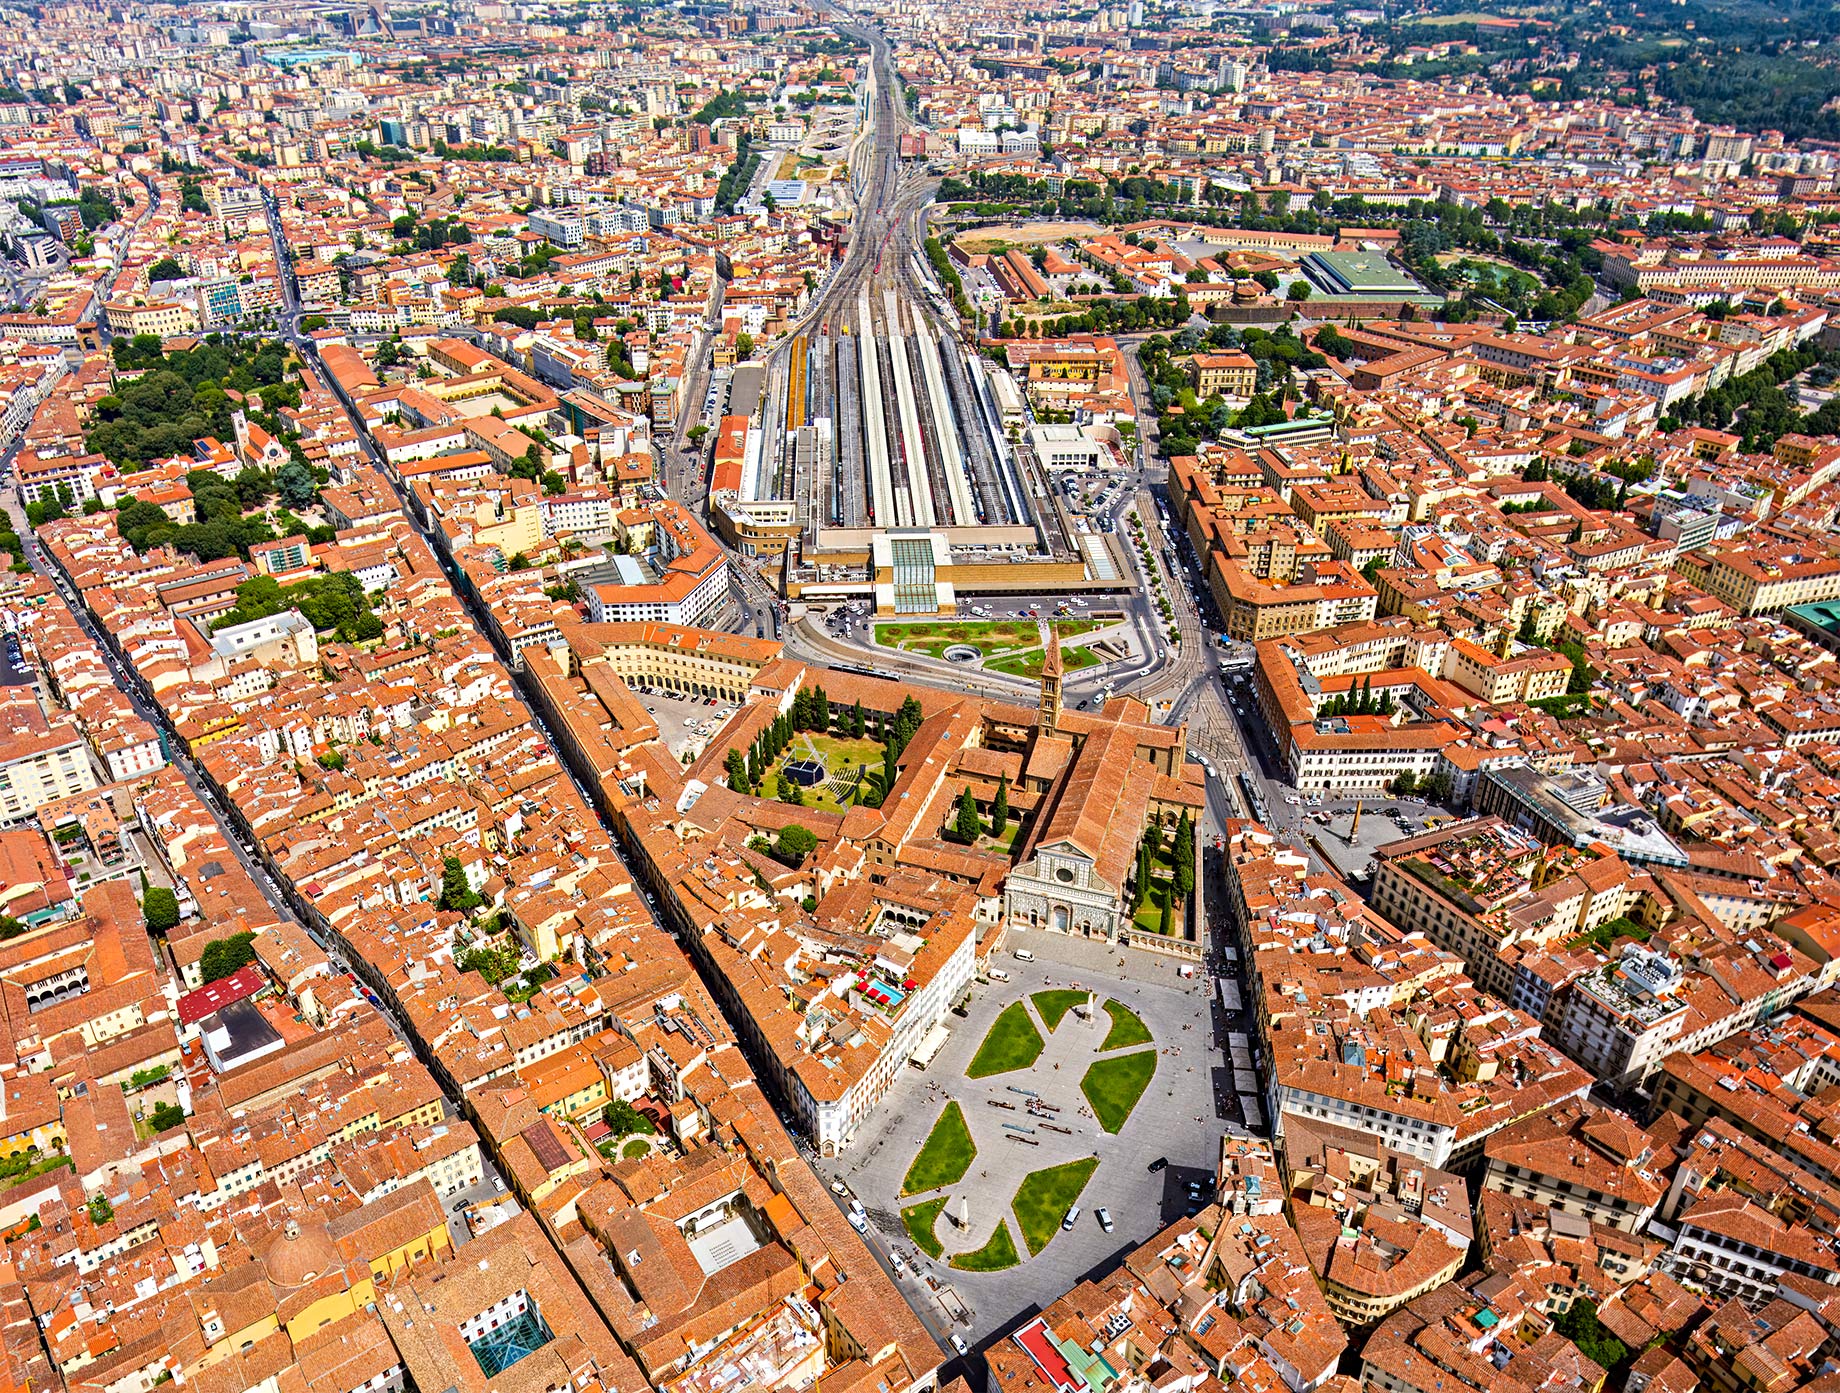 Firenze Santa Maria Novella – Train Station – Florence, Italy